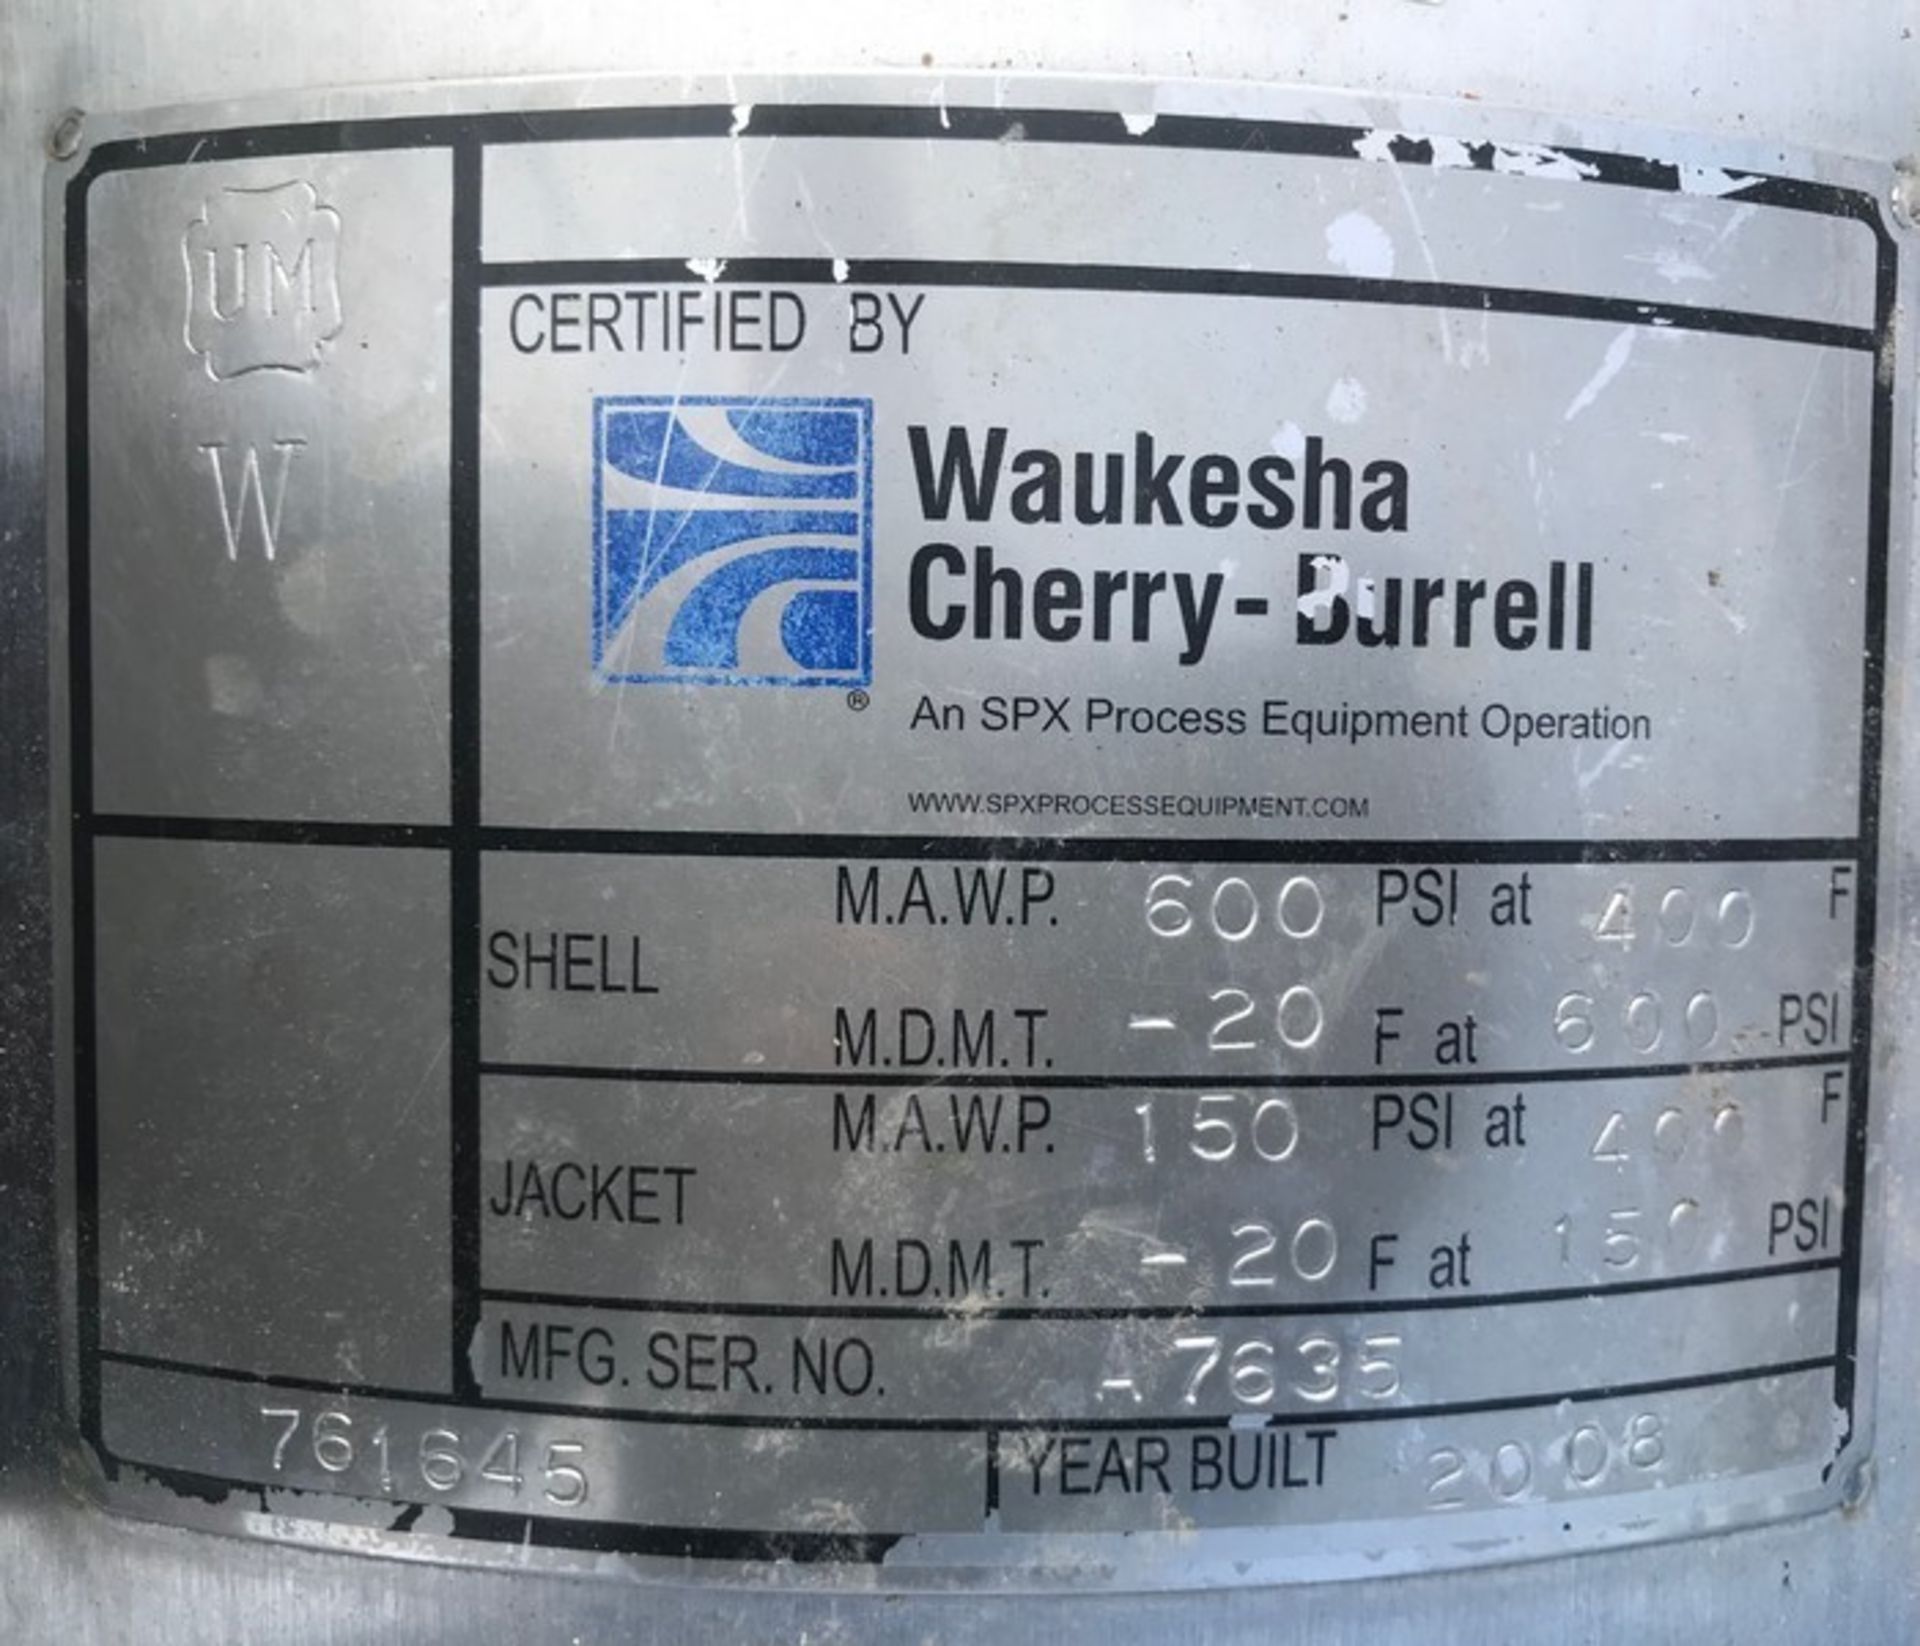 Waukesha Cherry Burrell Aprox. 6" Dia. x 84" L Contherm Votator II Scraped Surface S/S Heat - Image 2 of 3